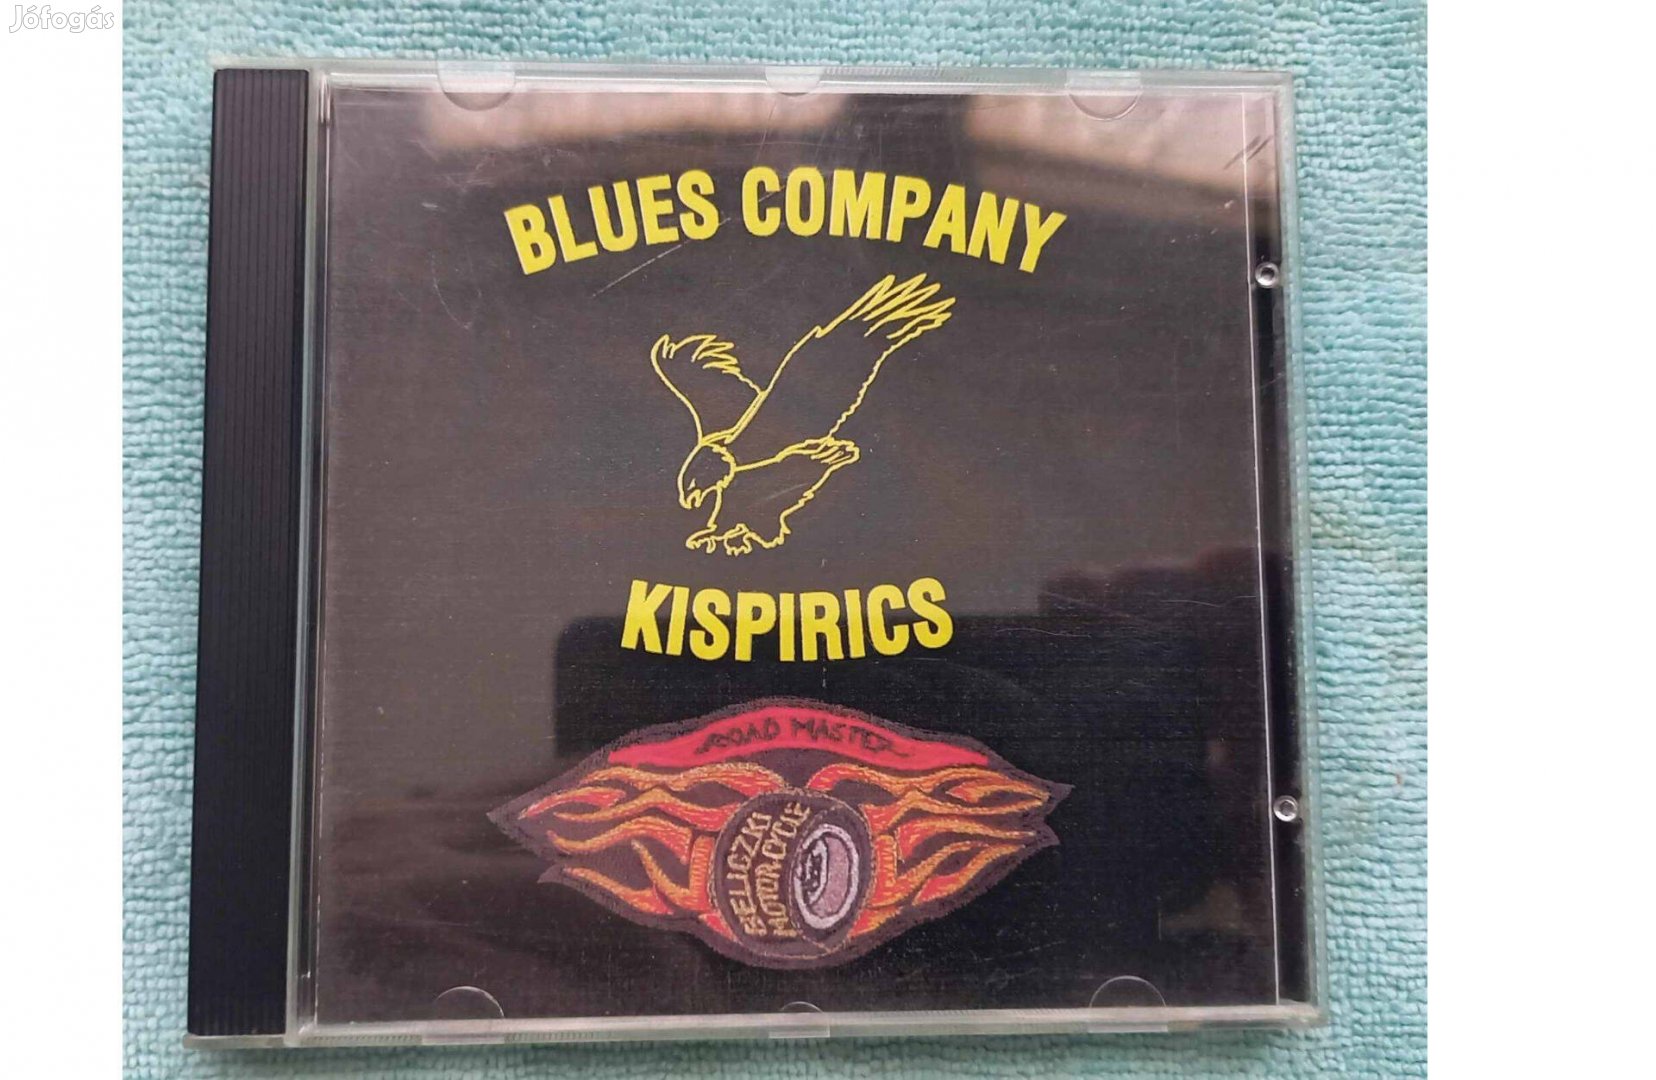 Blues Company - Kispirics CD (2001)